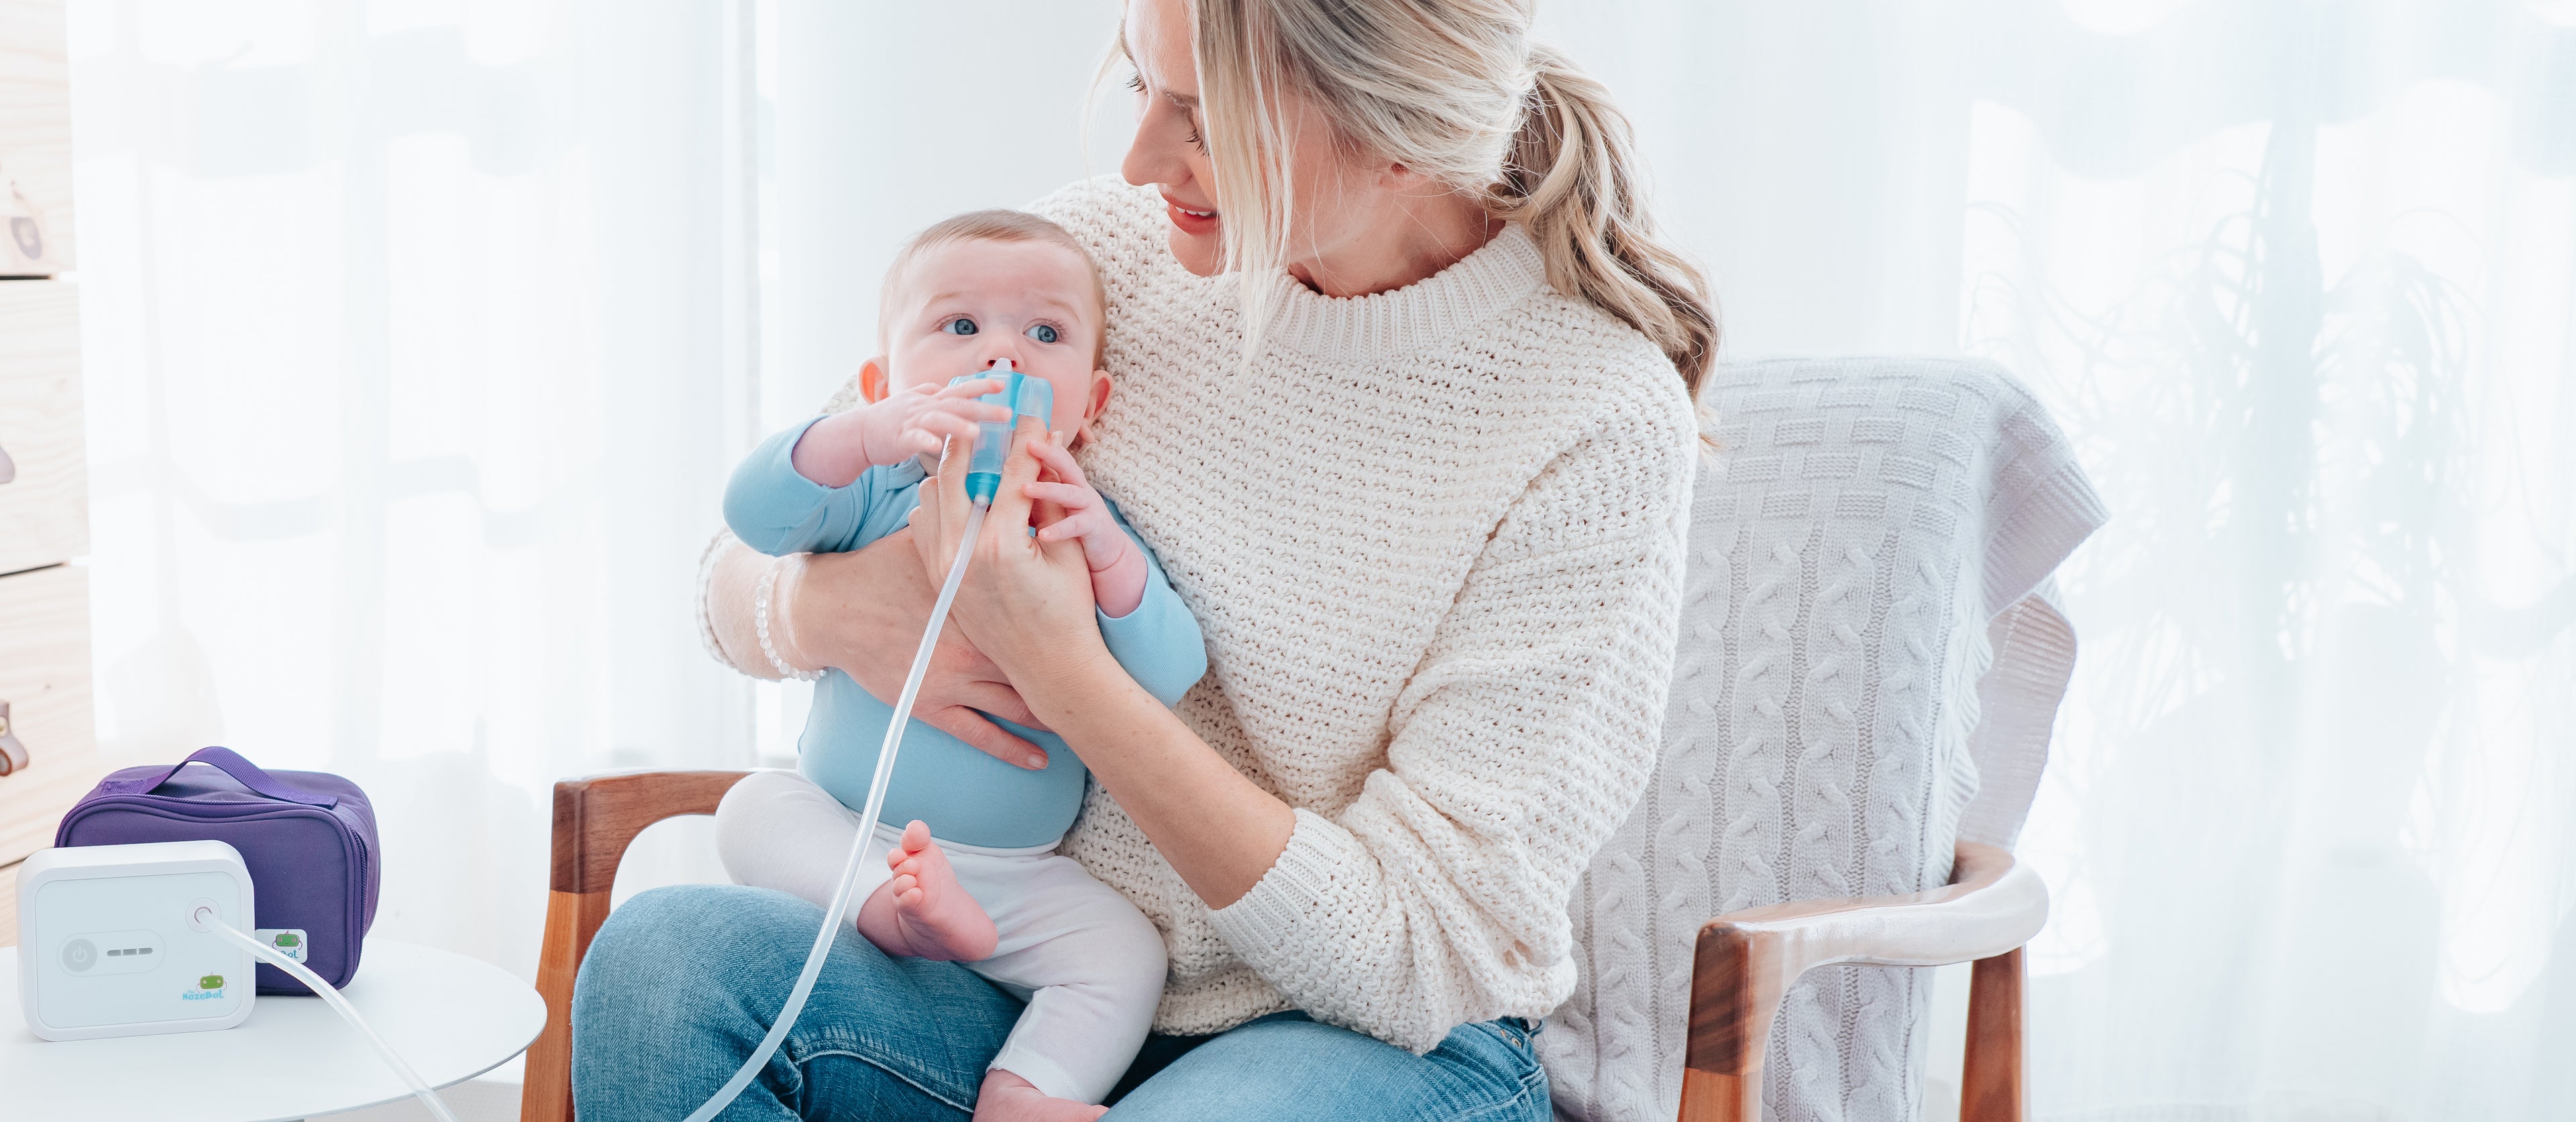 NozeBot Baby Nasal Aspirator  Infant Nasal Suction Device – Dr